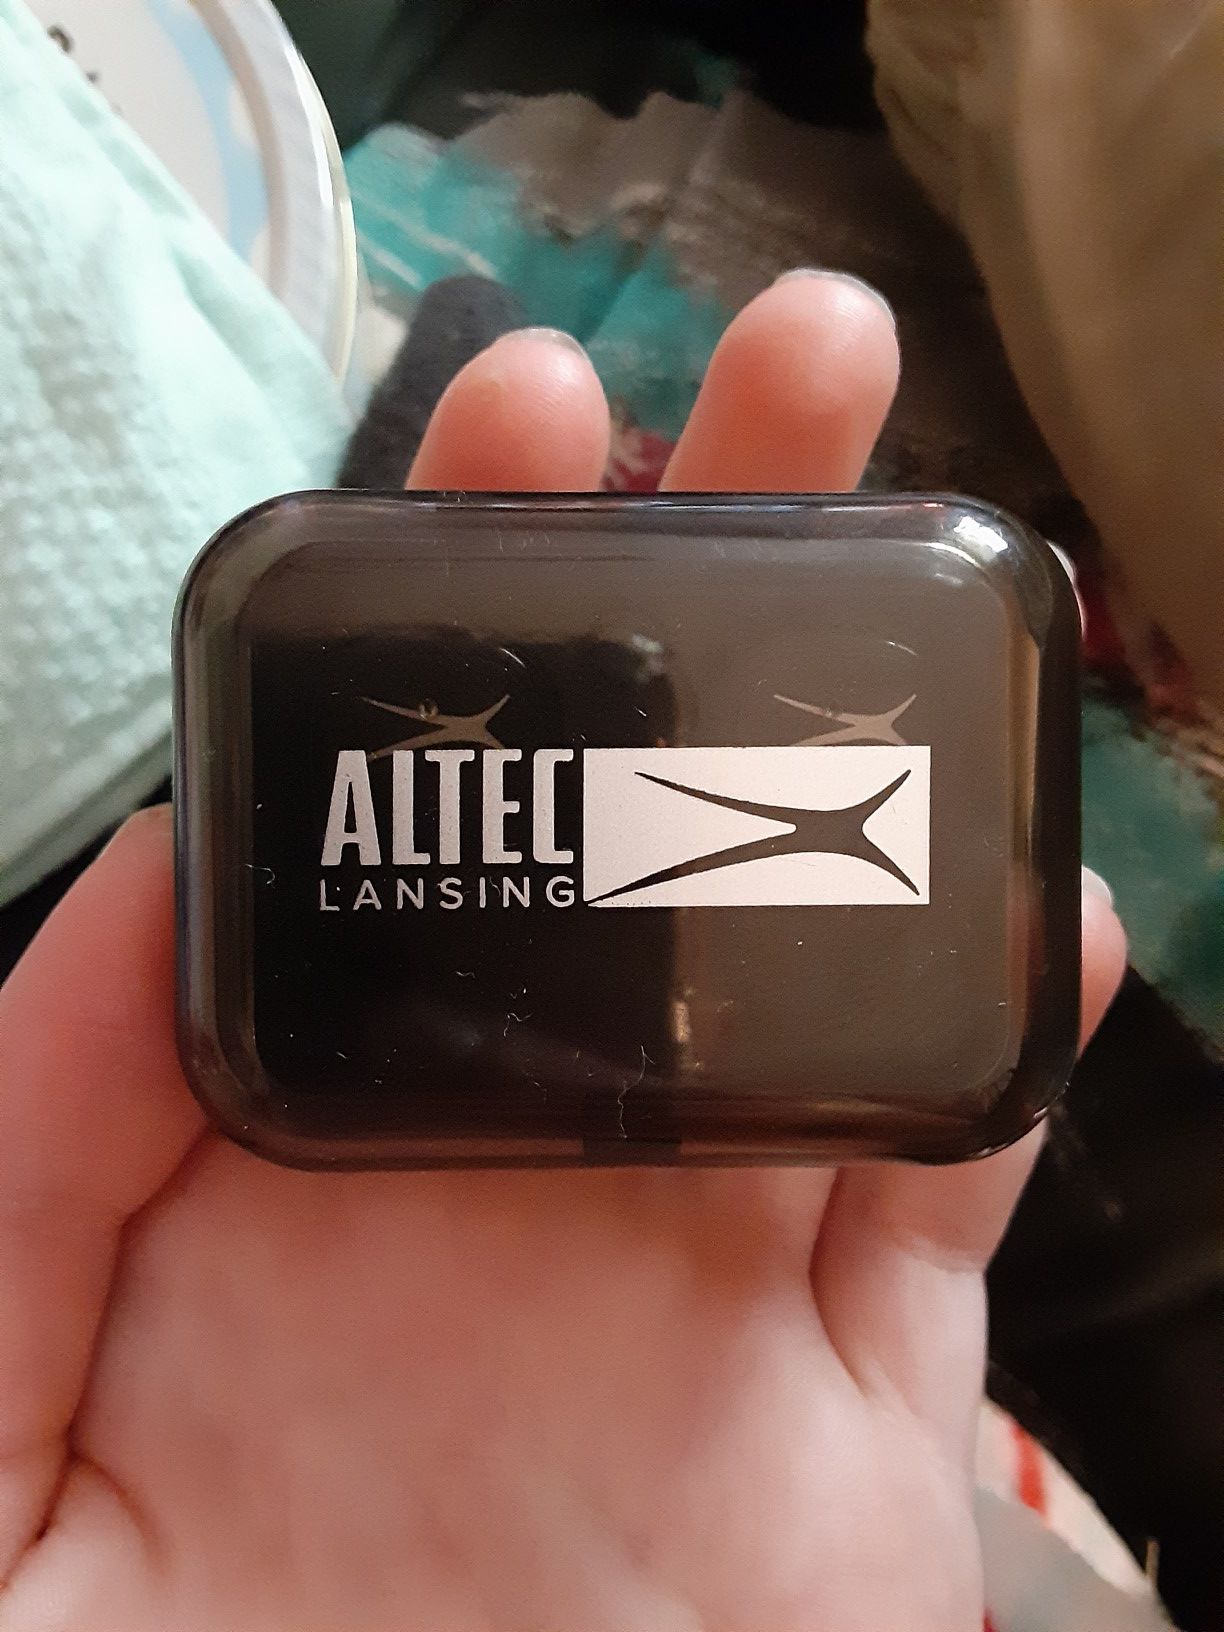 Altec Lansing wireless bluetooth earbuds